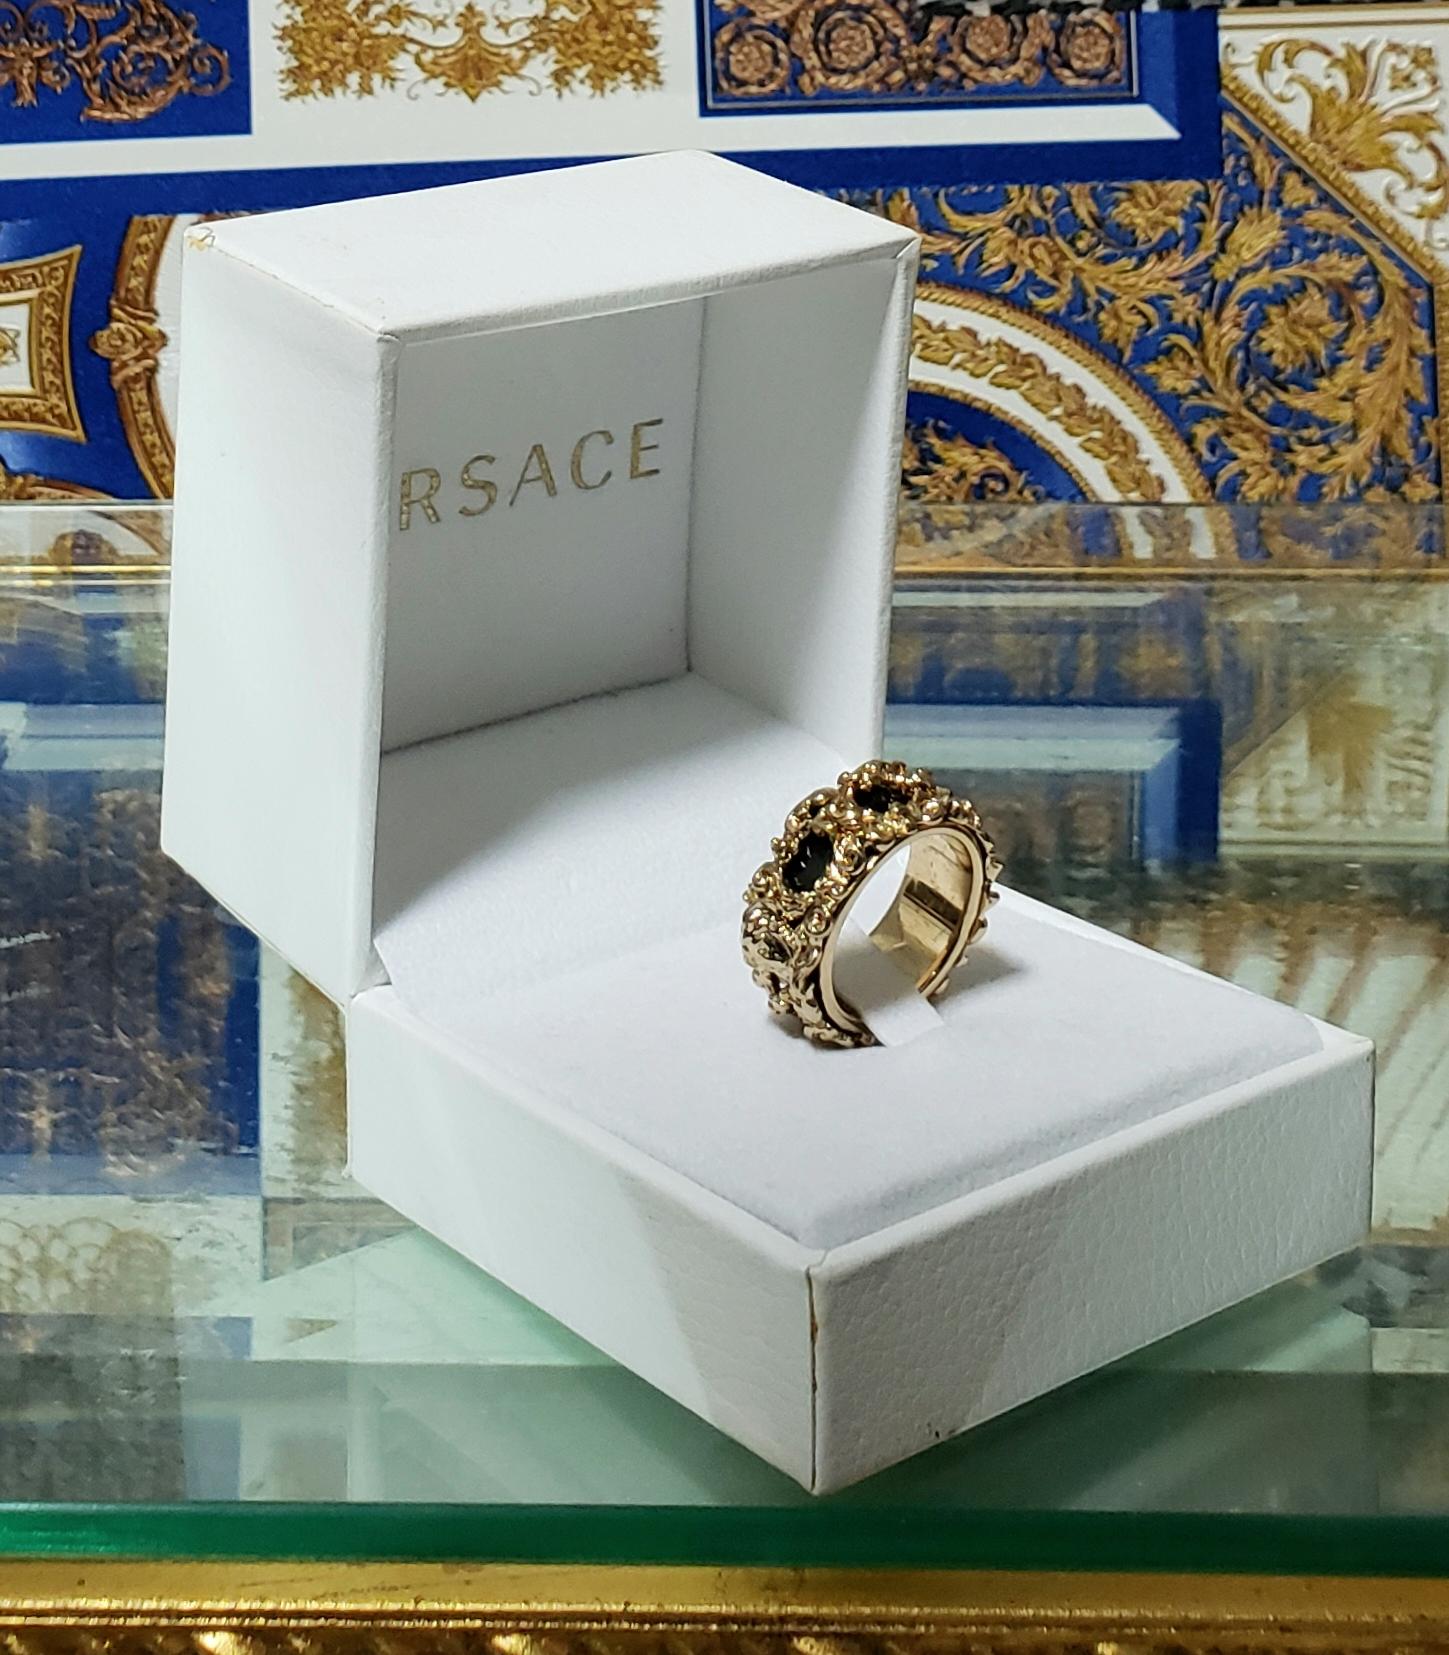 versace ring box